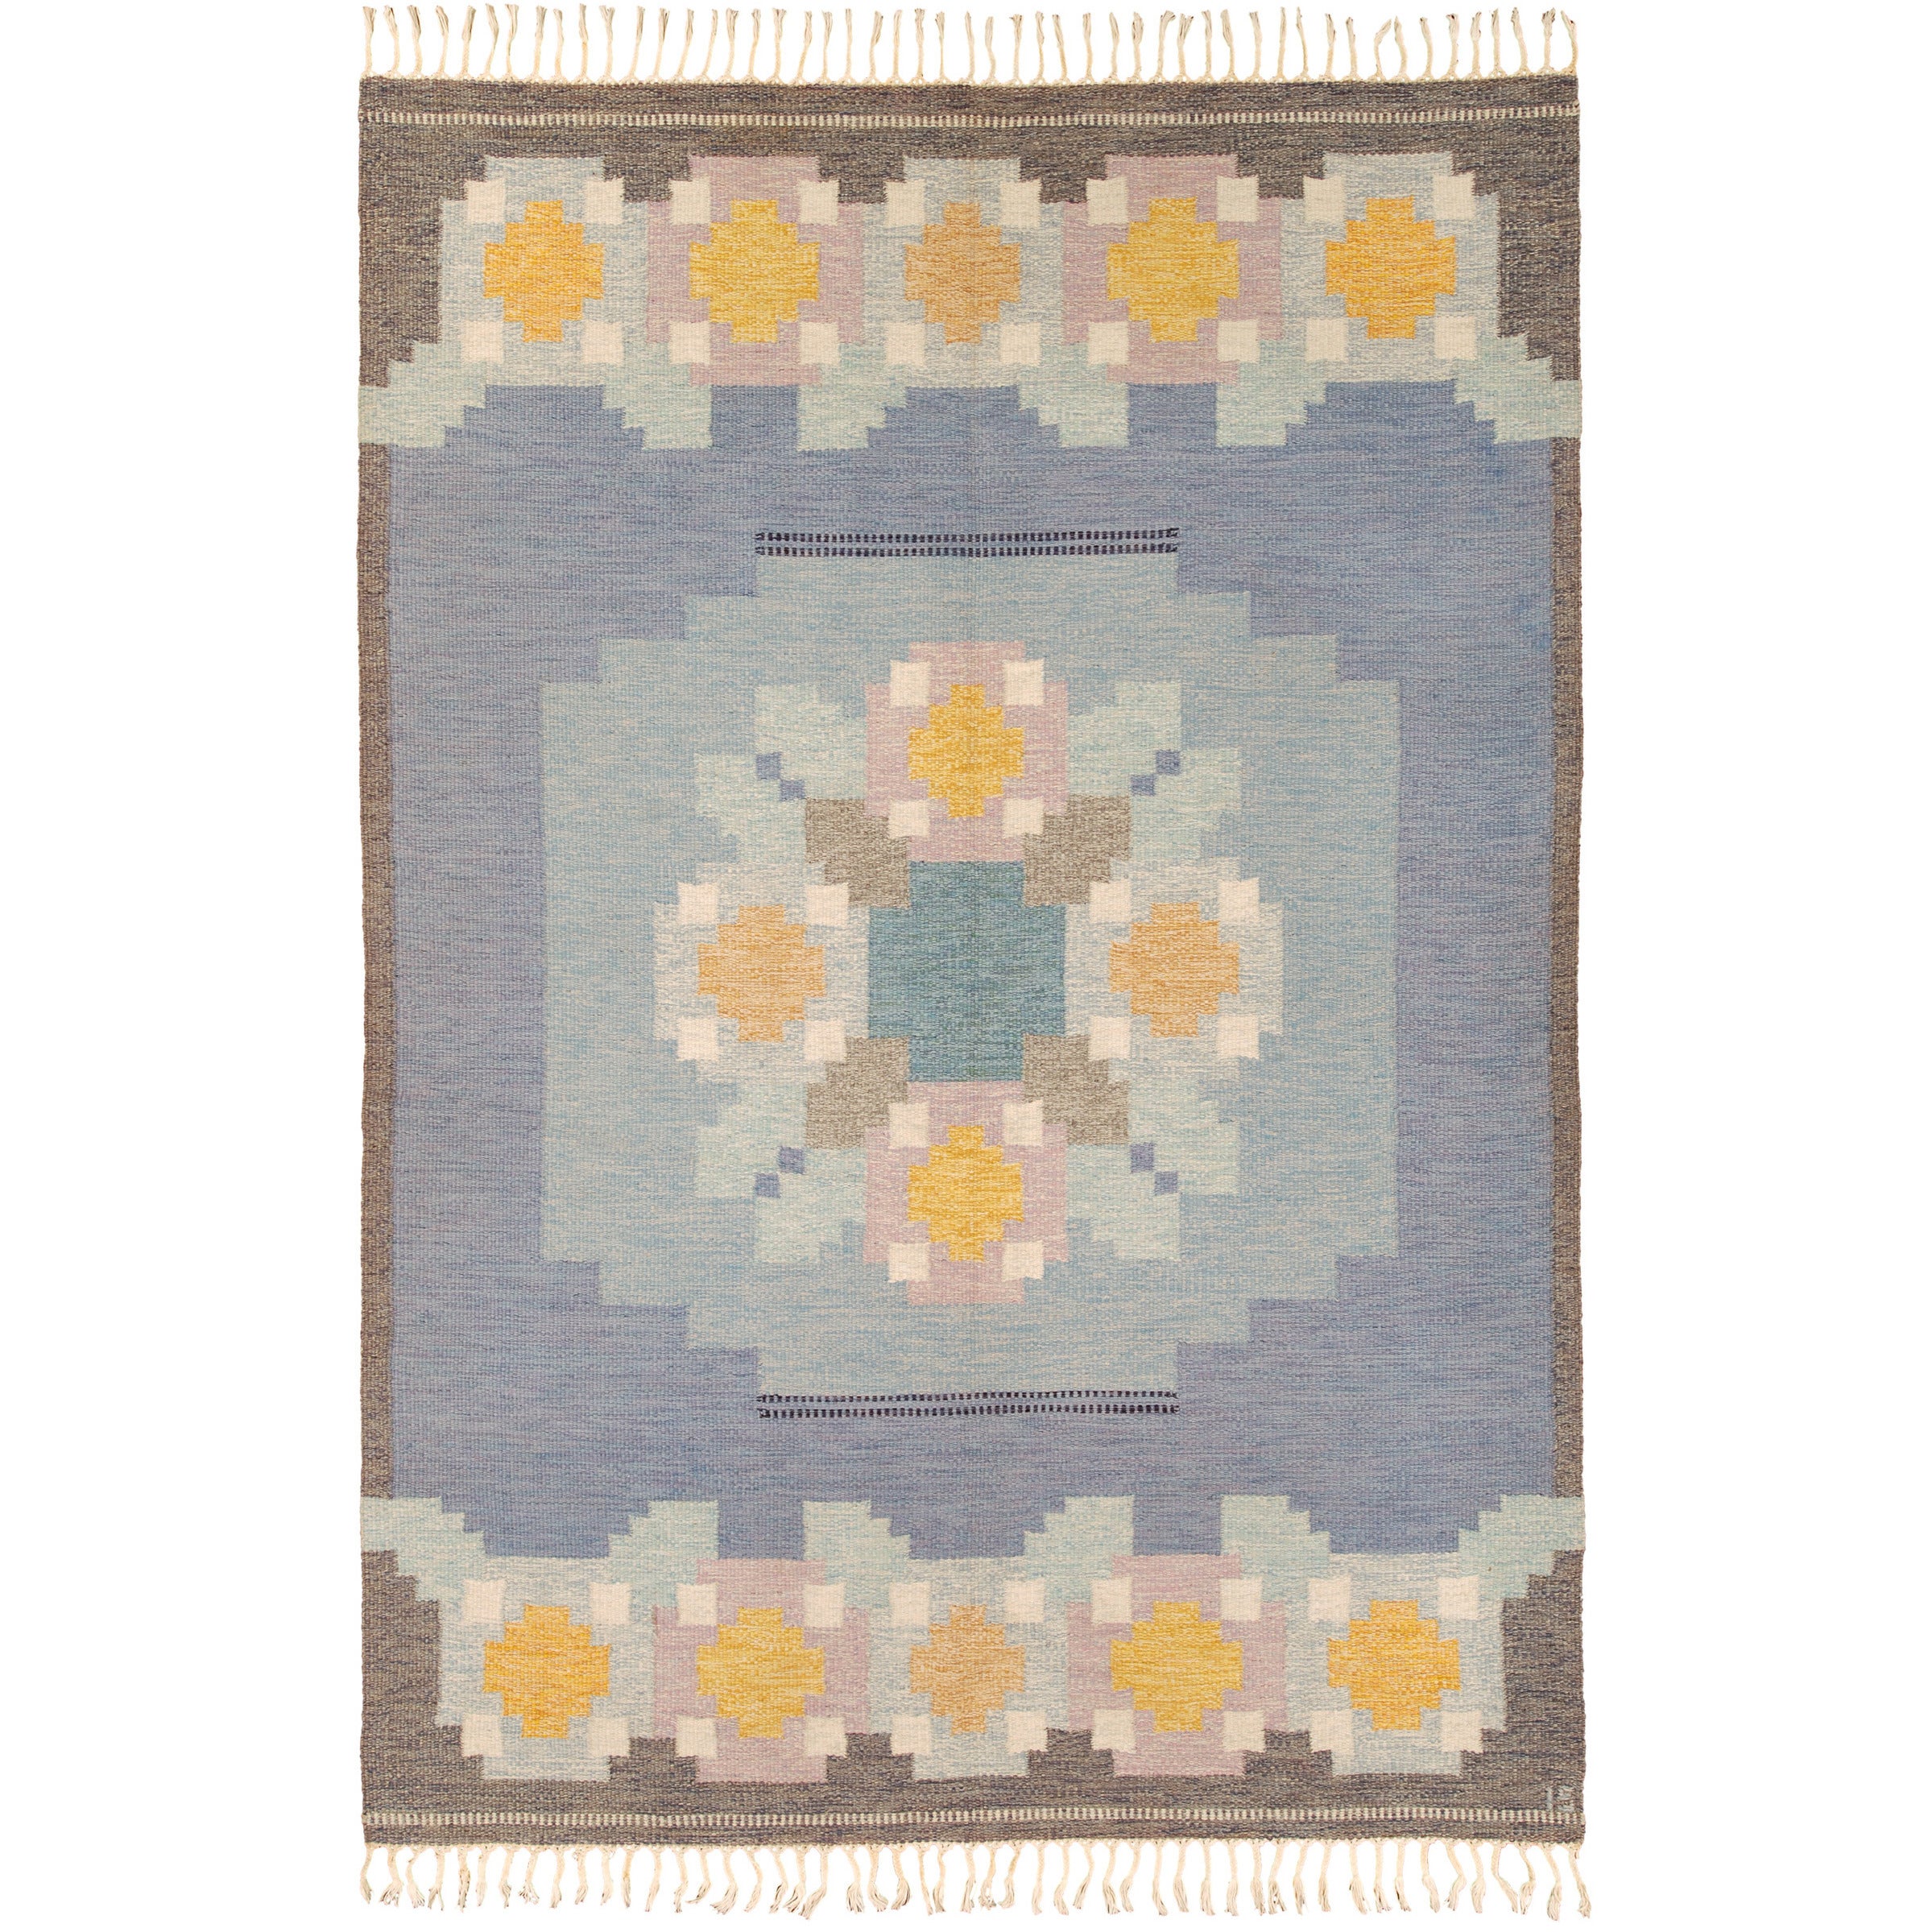 20th Century Swedish Flat-Weave Carpet by Ingegerd Silow